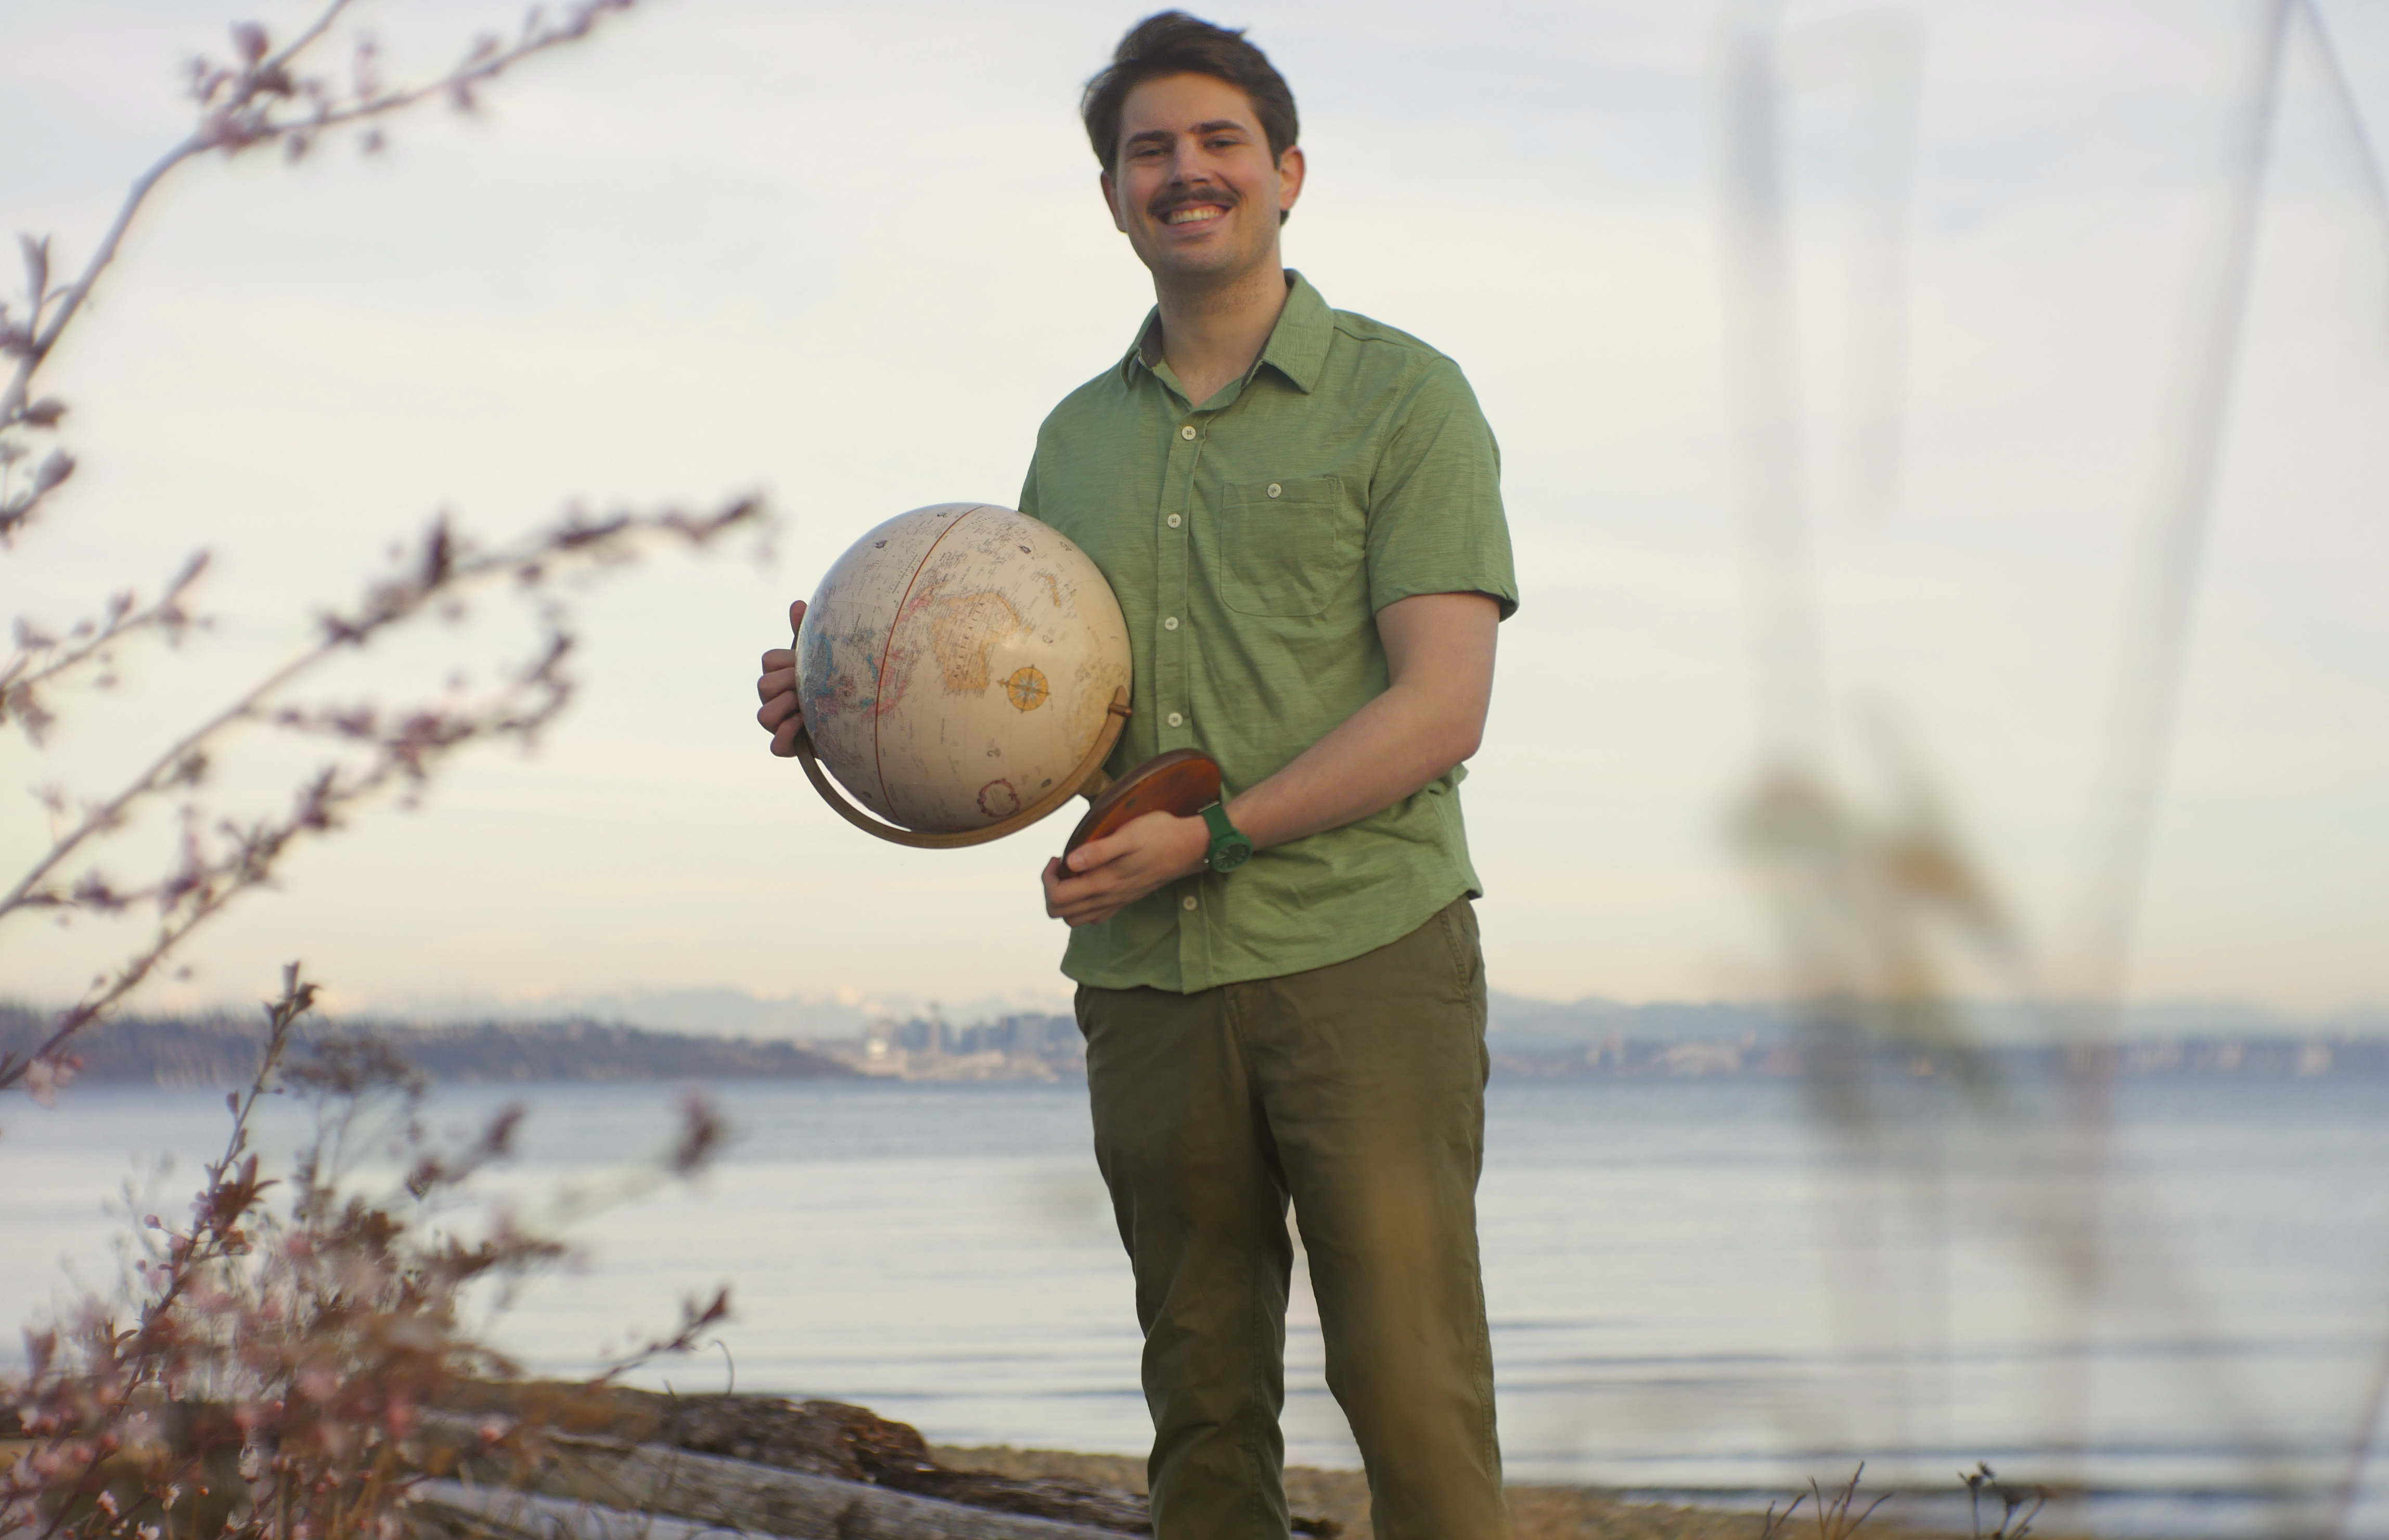 Kyle holding a globe.